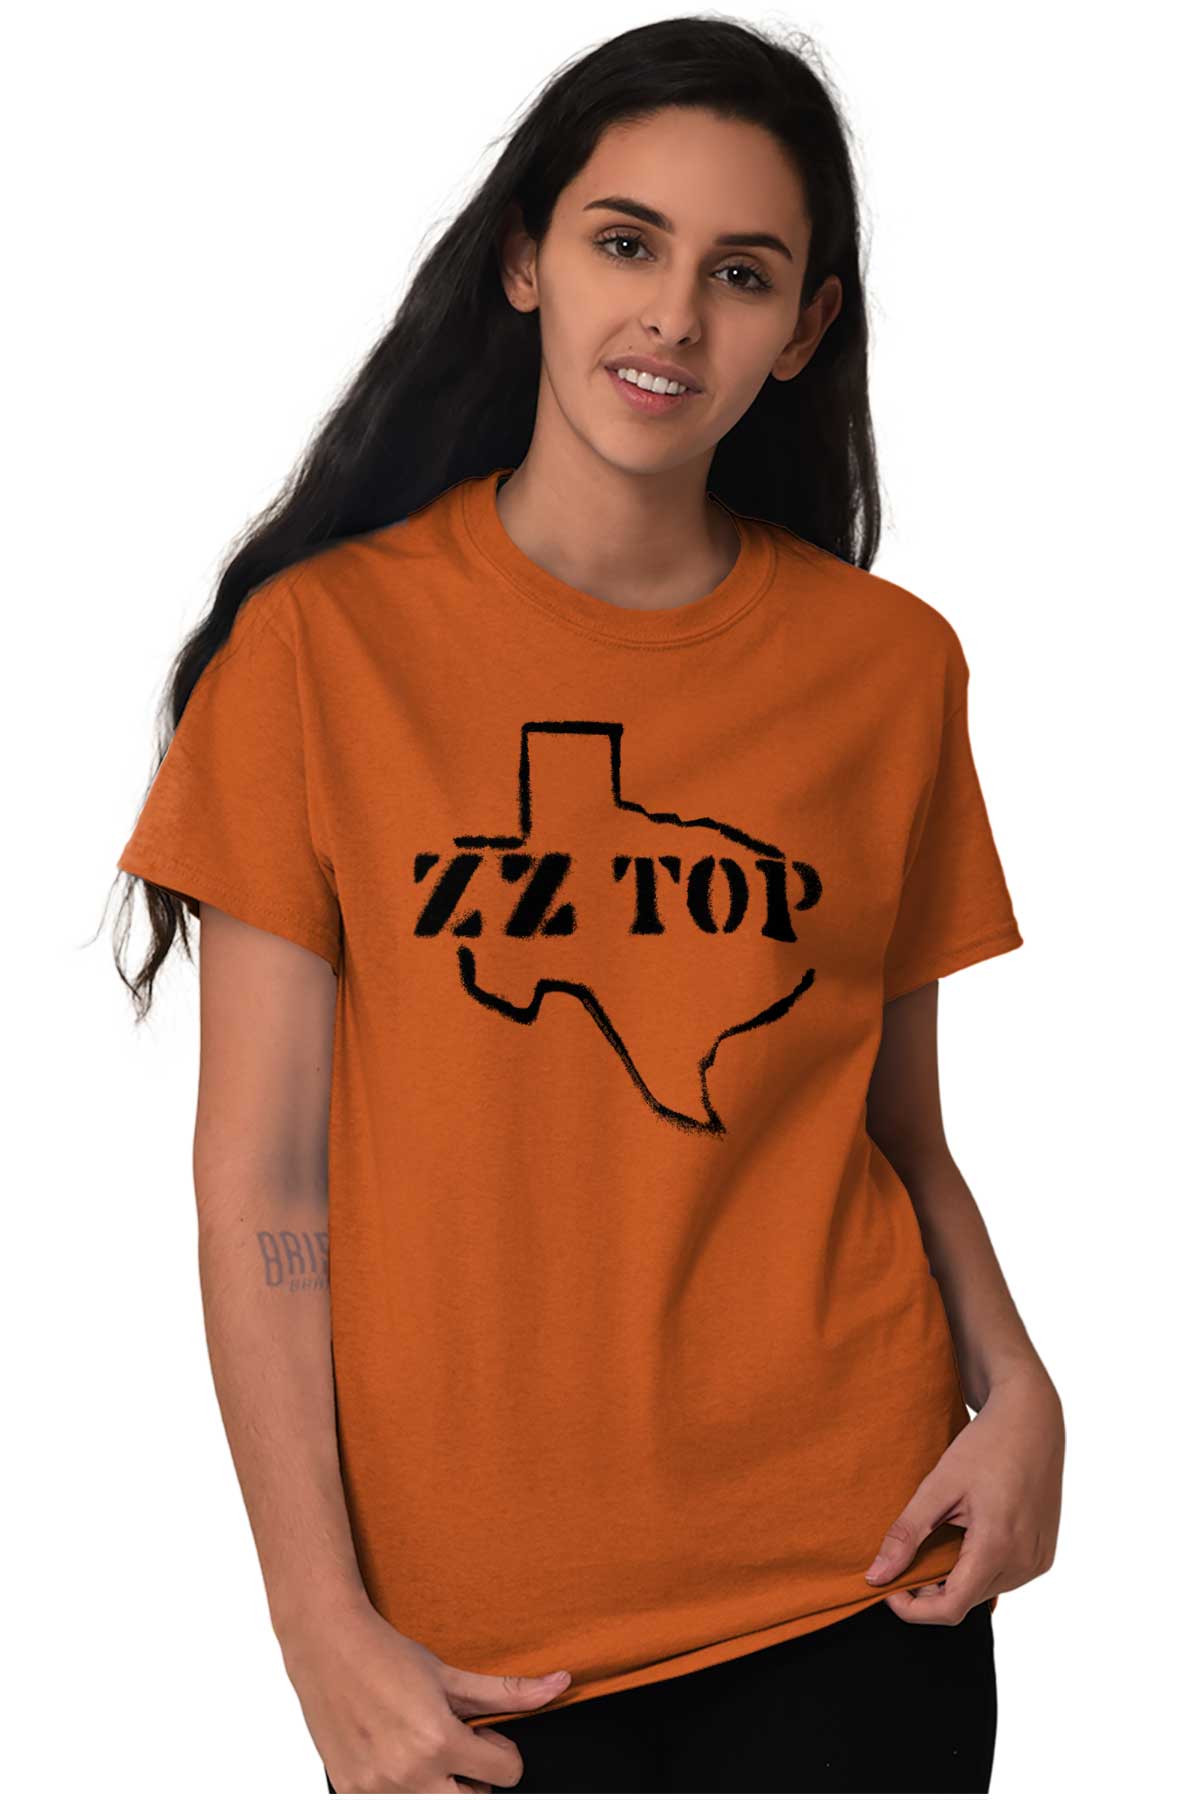 ZZ Top Official Concert Merch 80s Men's Graphic T Shirt Tees Brisco Brands 3X - image 4 of 6